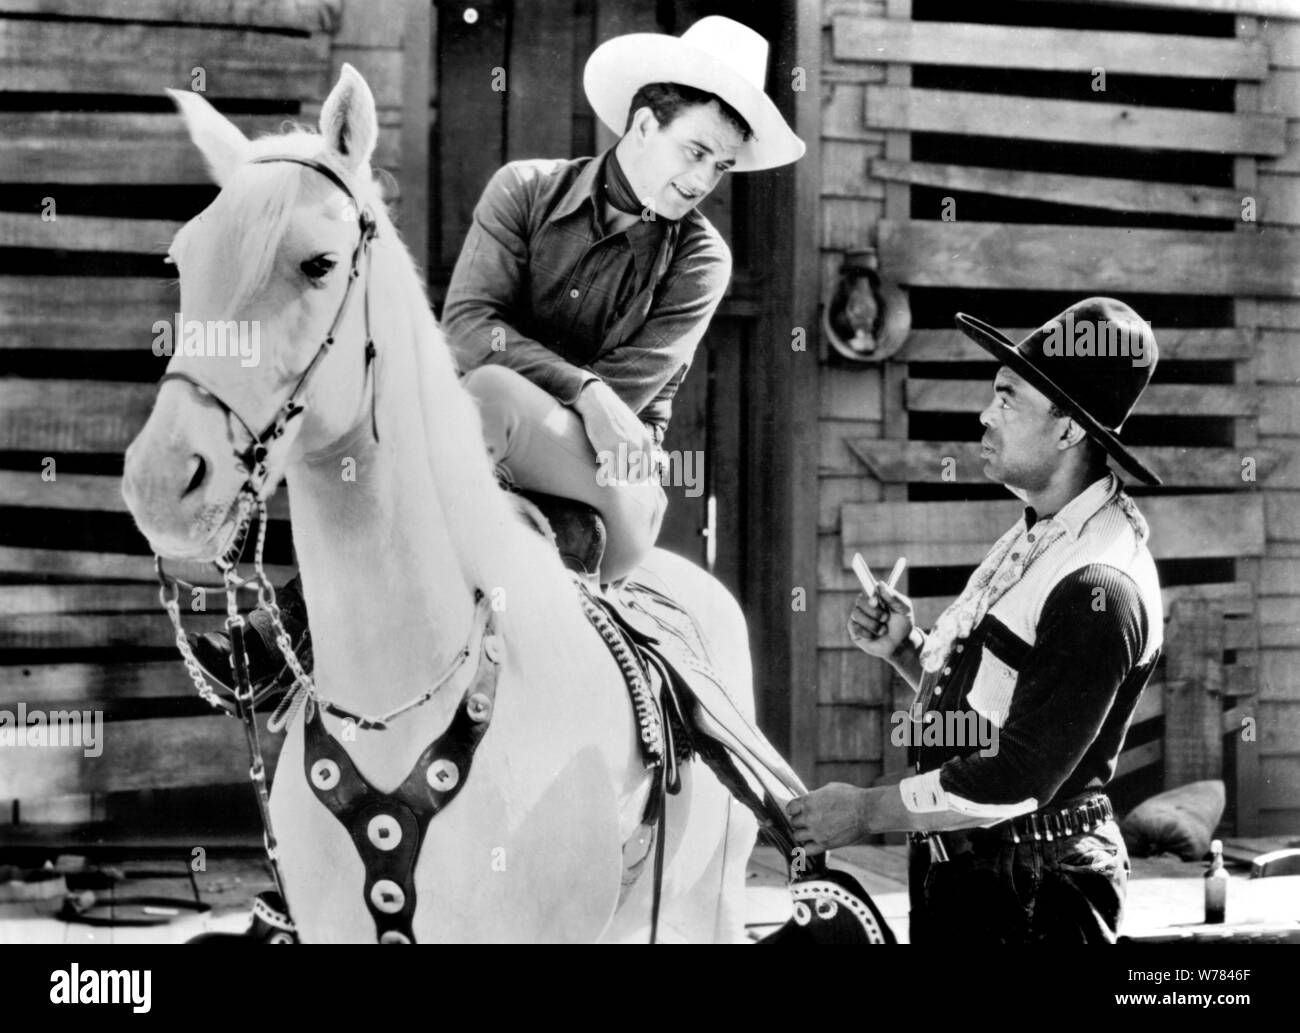 John wayne cowboy Black and White Stock Photos & Images - Alamy